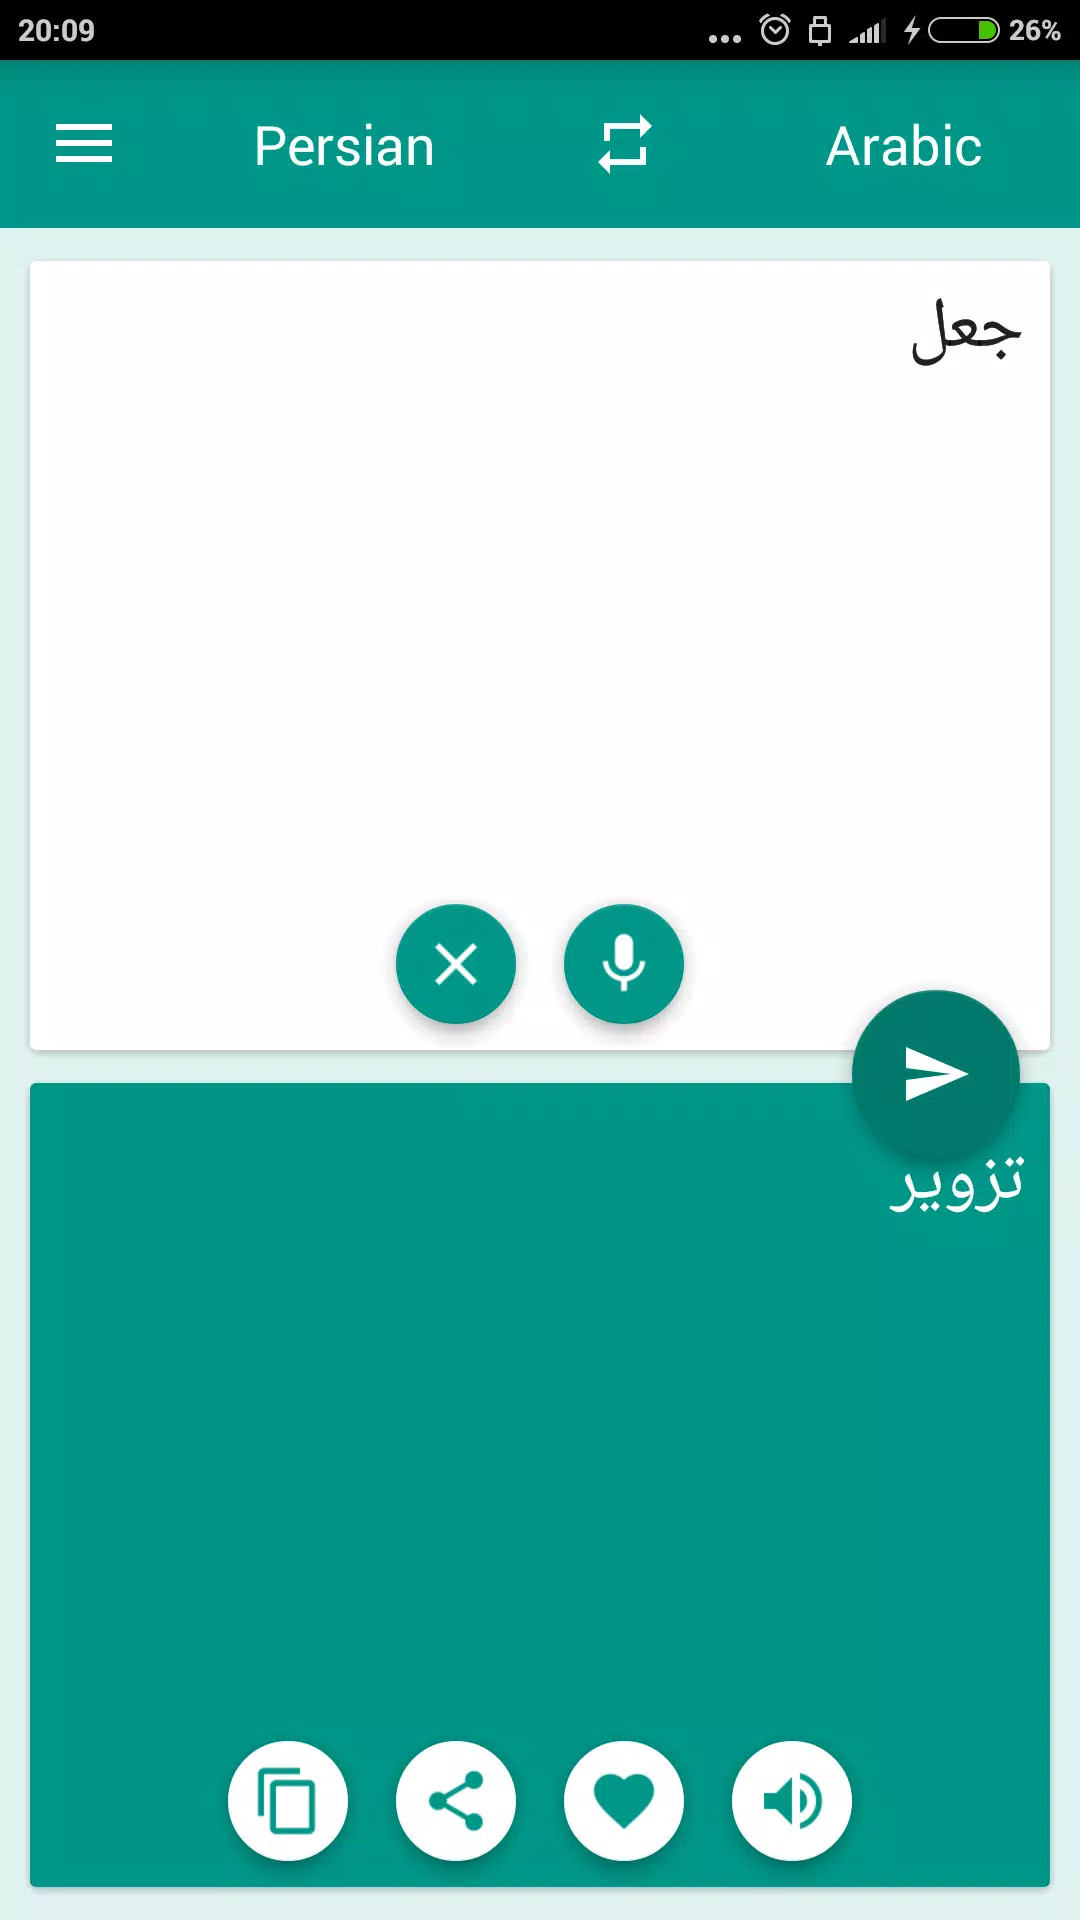 Arabic-Persian Translator Apk For Android Download